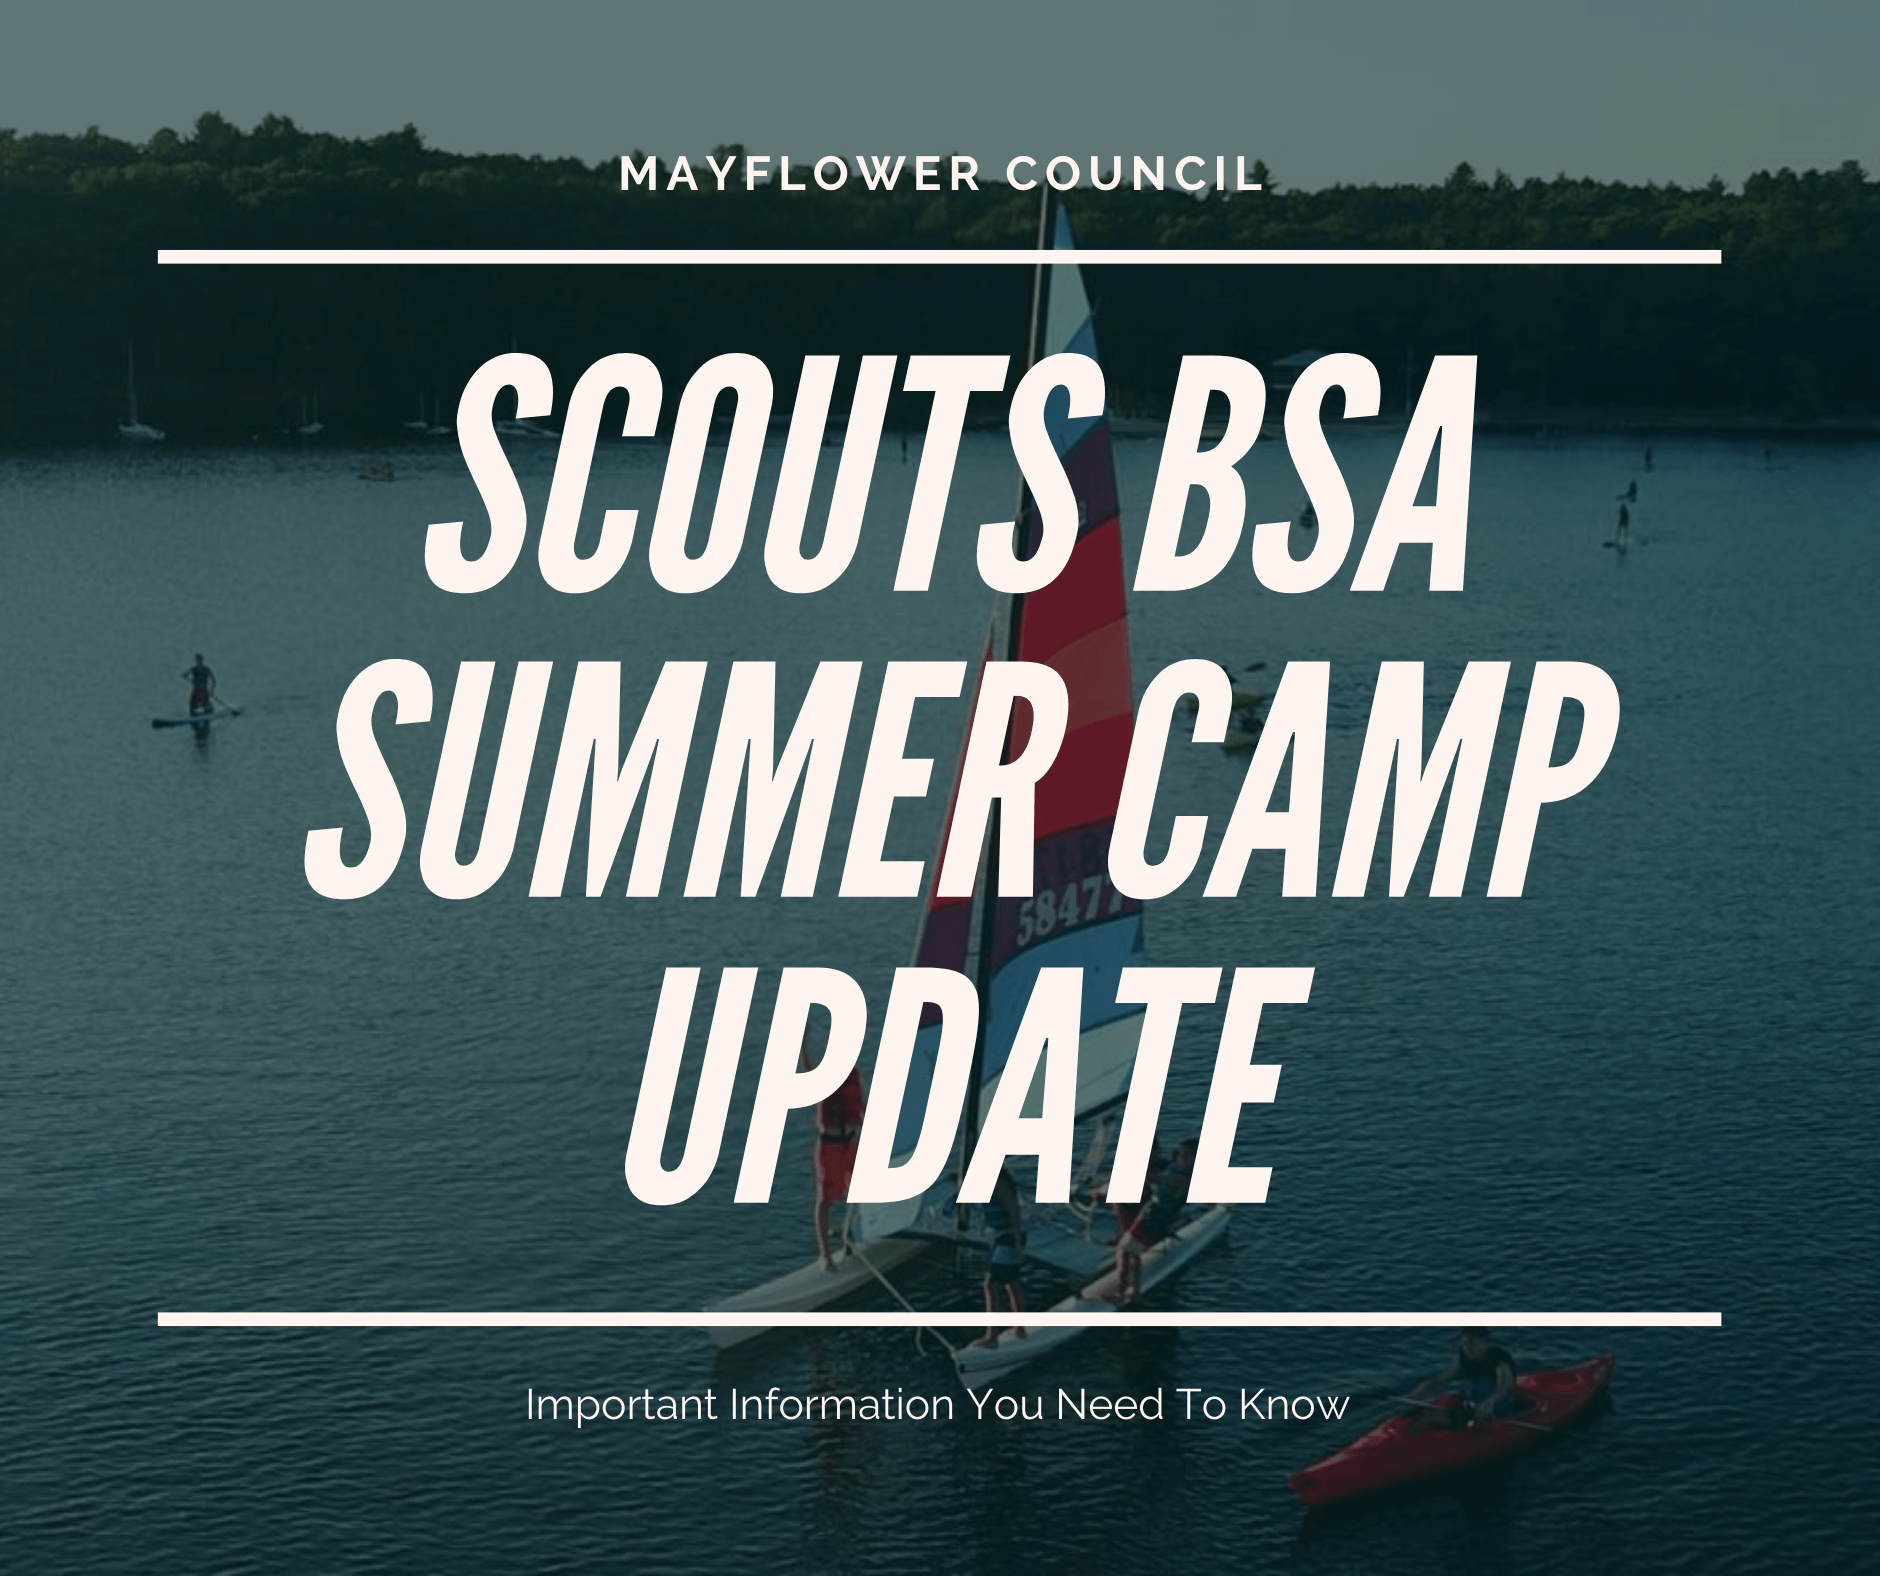 Scouts BSA Summer Camp Update